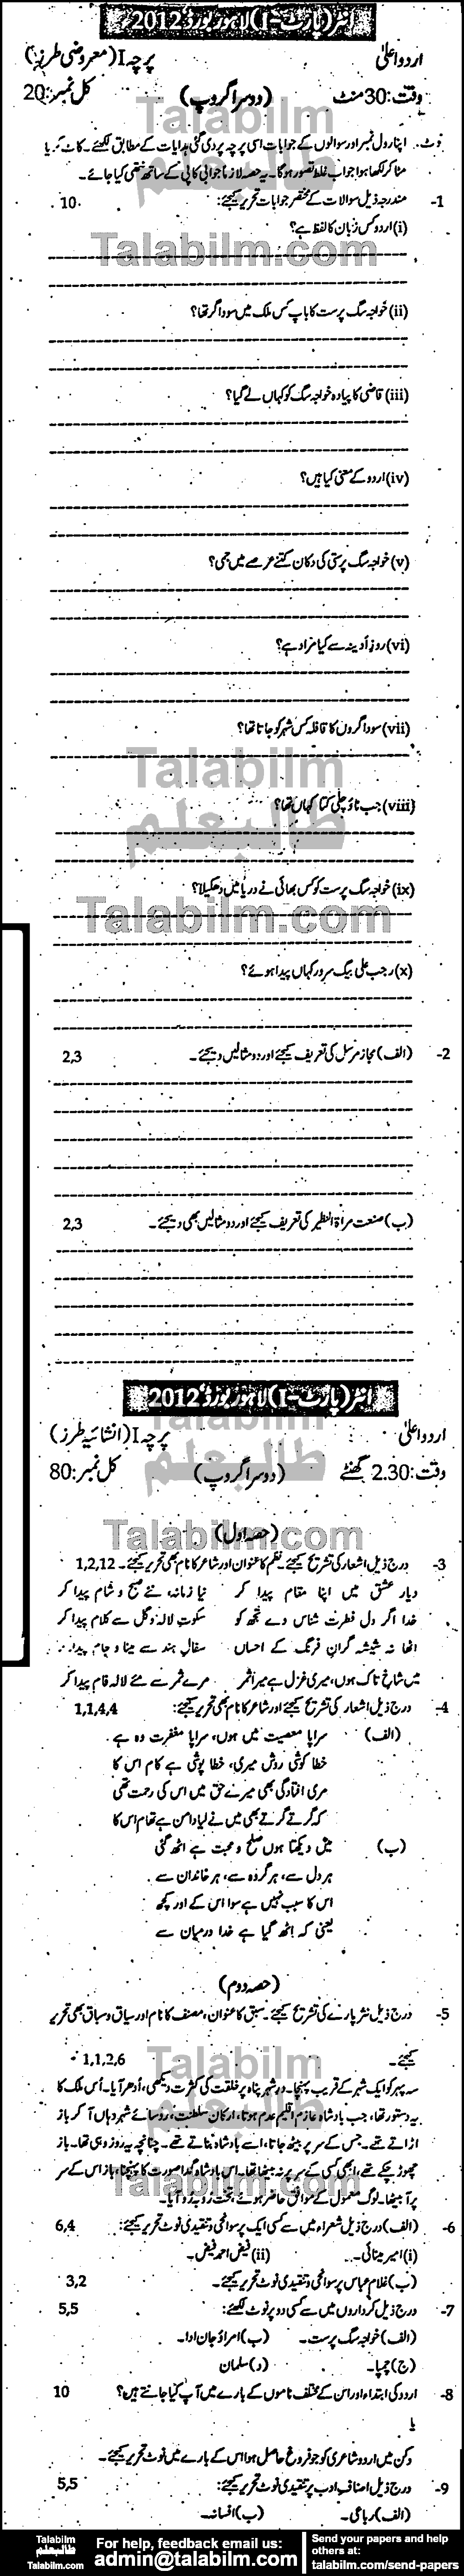 Urdu 0 past paper for Group-II 2012